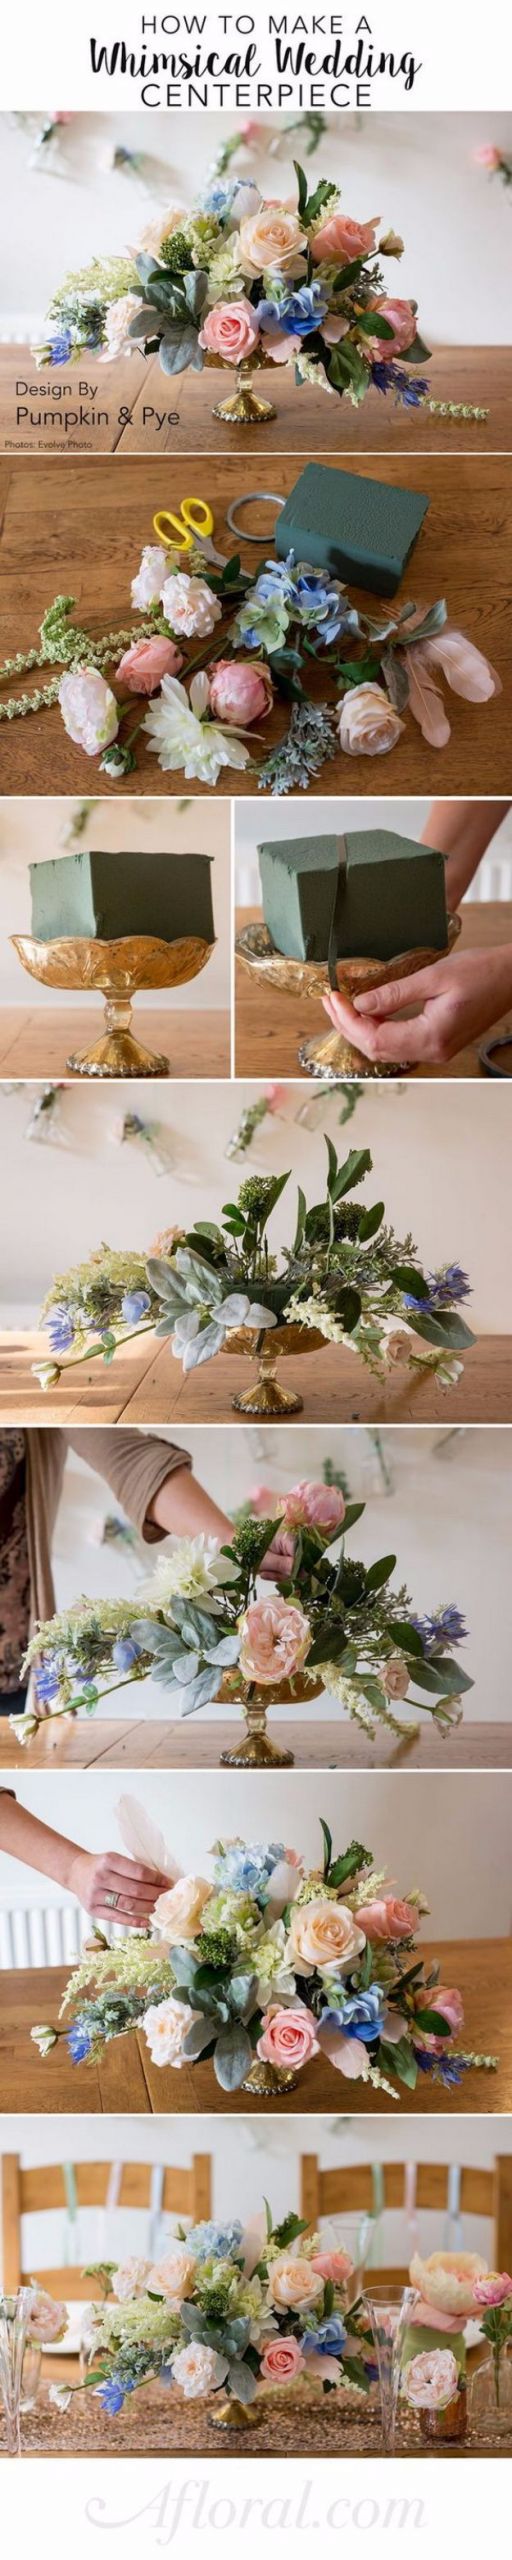 DIY Flower Centerpieces For Weddings
 DIY Wedding Centerpieces 33 Cheap and Easy Centerpiece Ideas